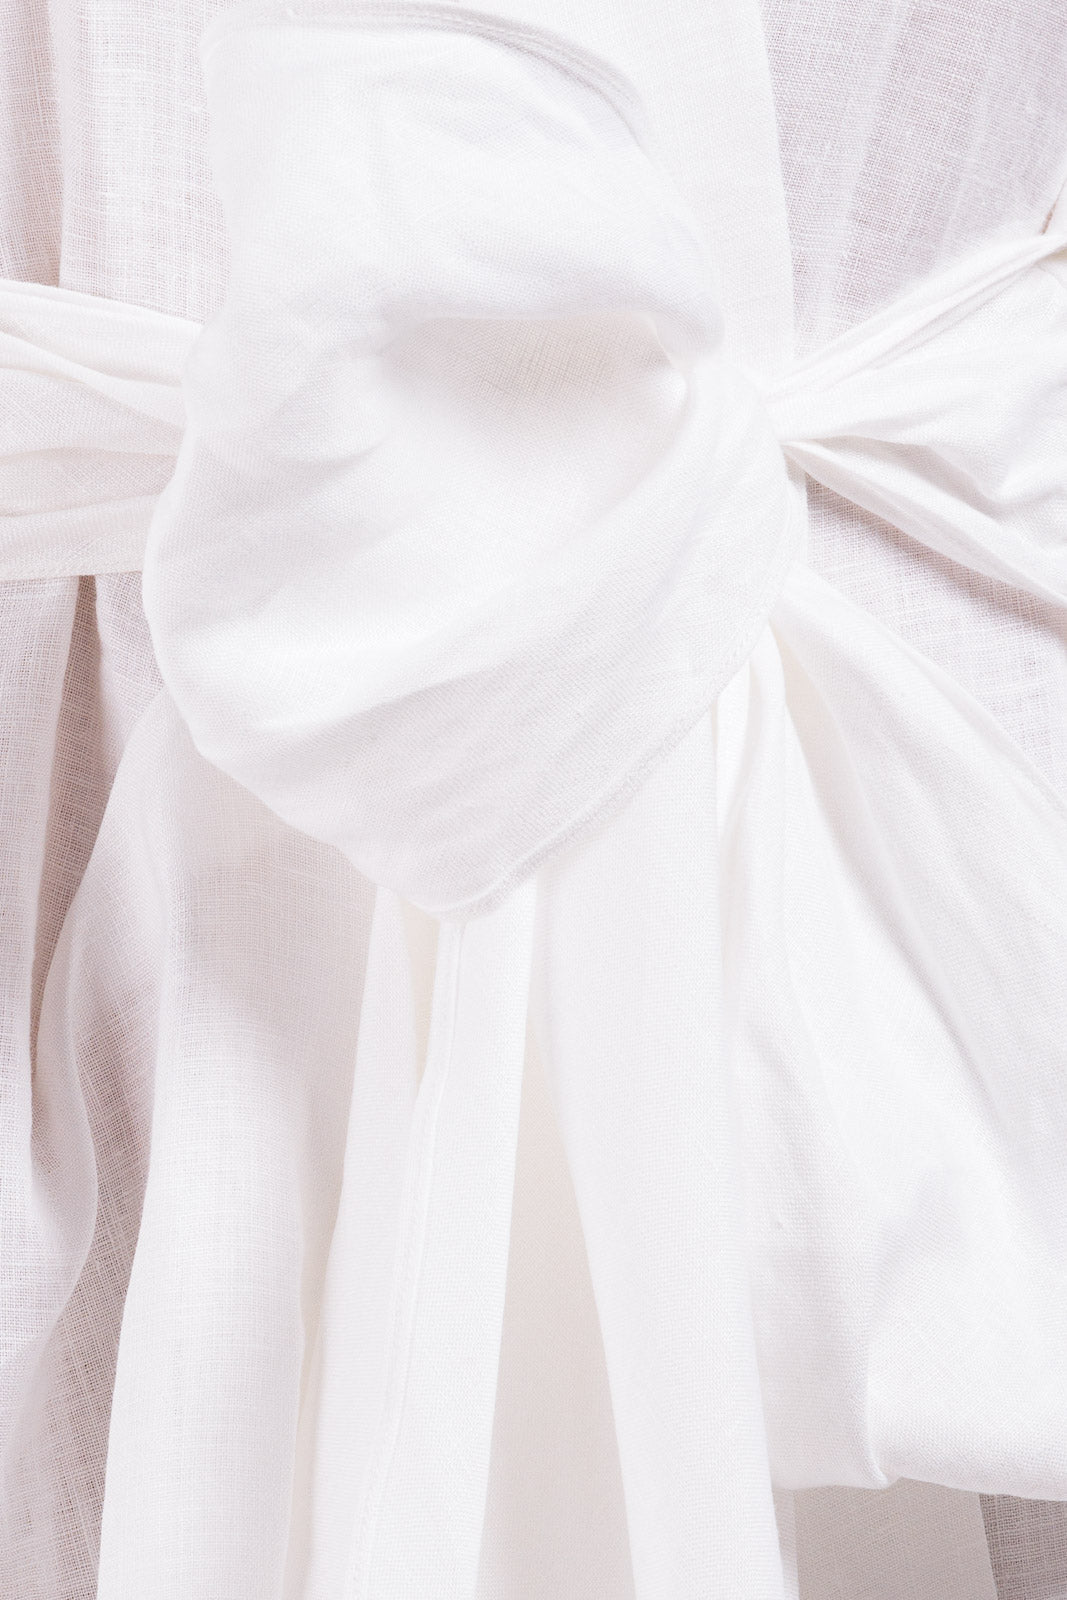 Linen Wrap Around Dress (with  Flower Applique)